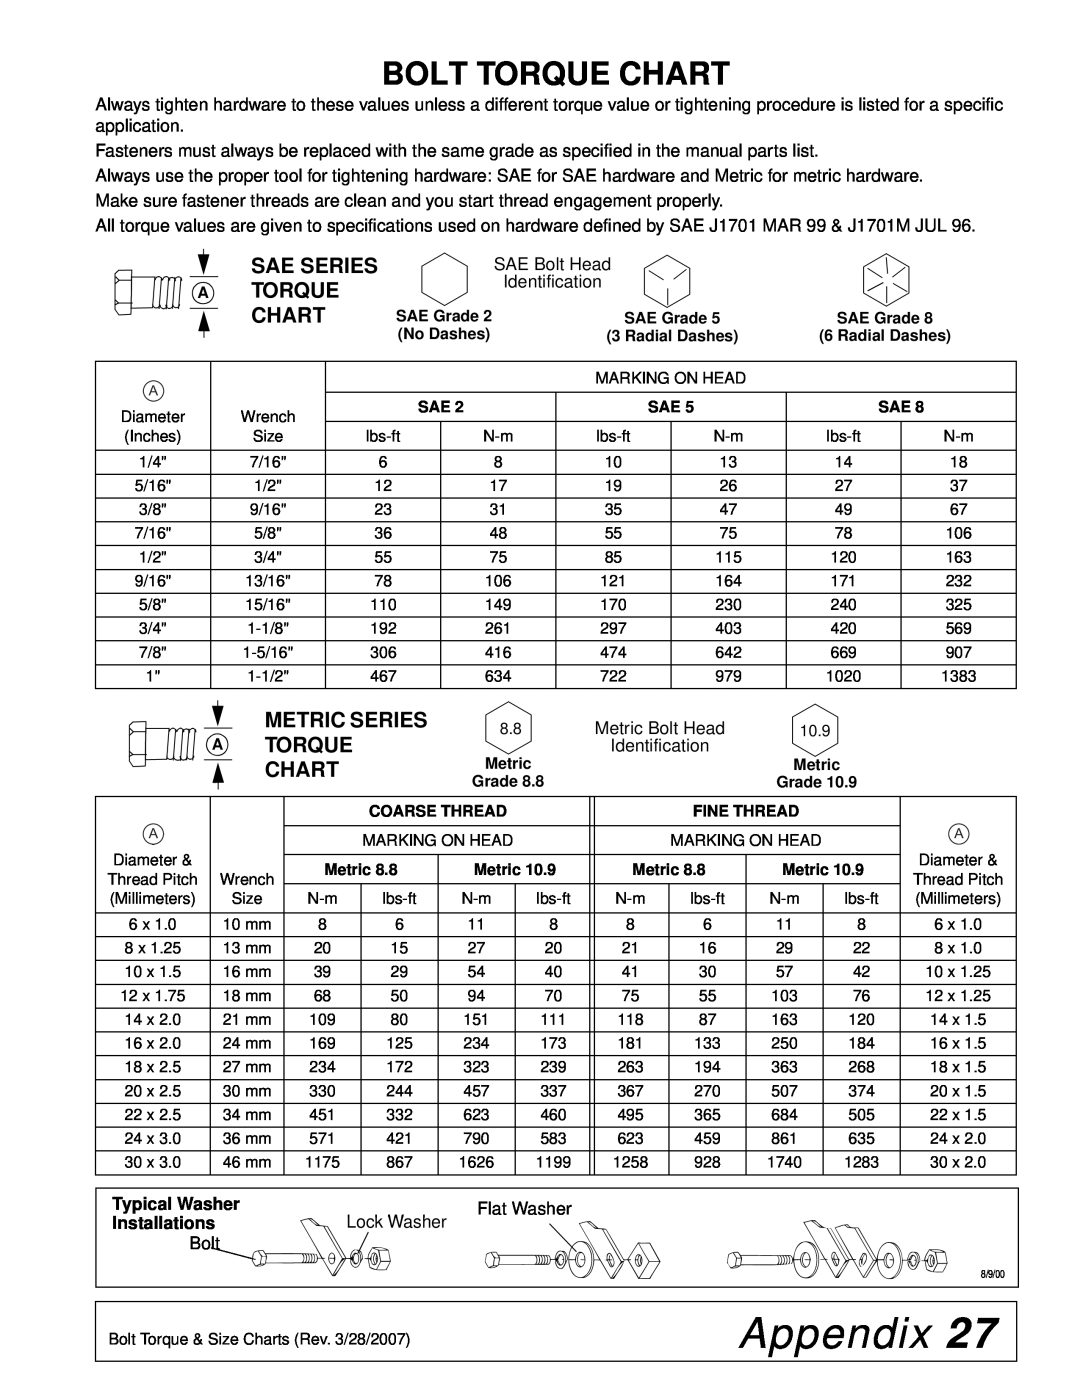 Woods Equipment 59HC-1 manual Appendix, Bolt Torque Chart, Sae Series A Torque Chart, Metric Series 